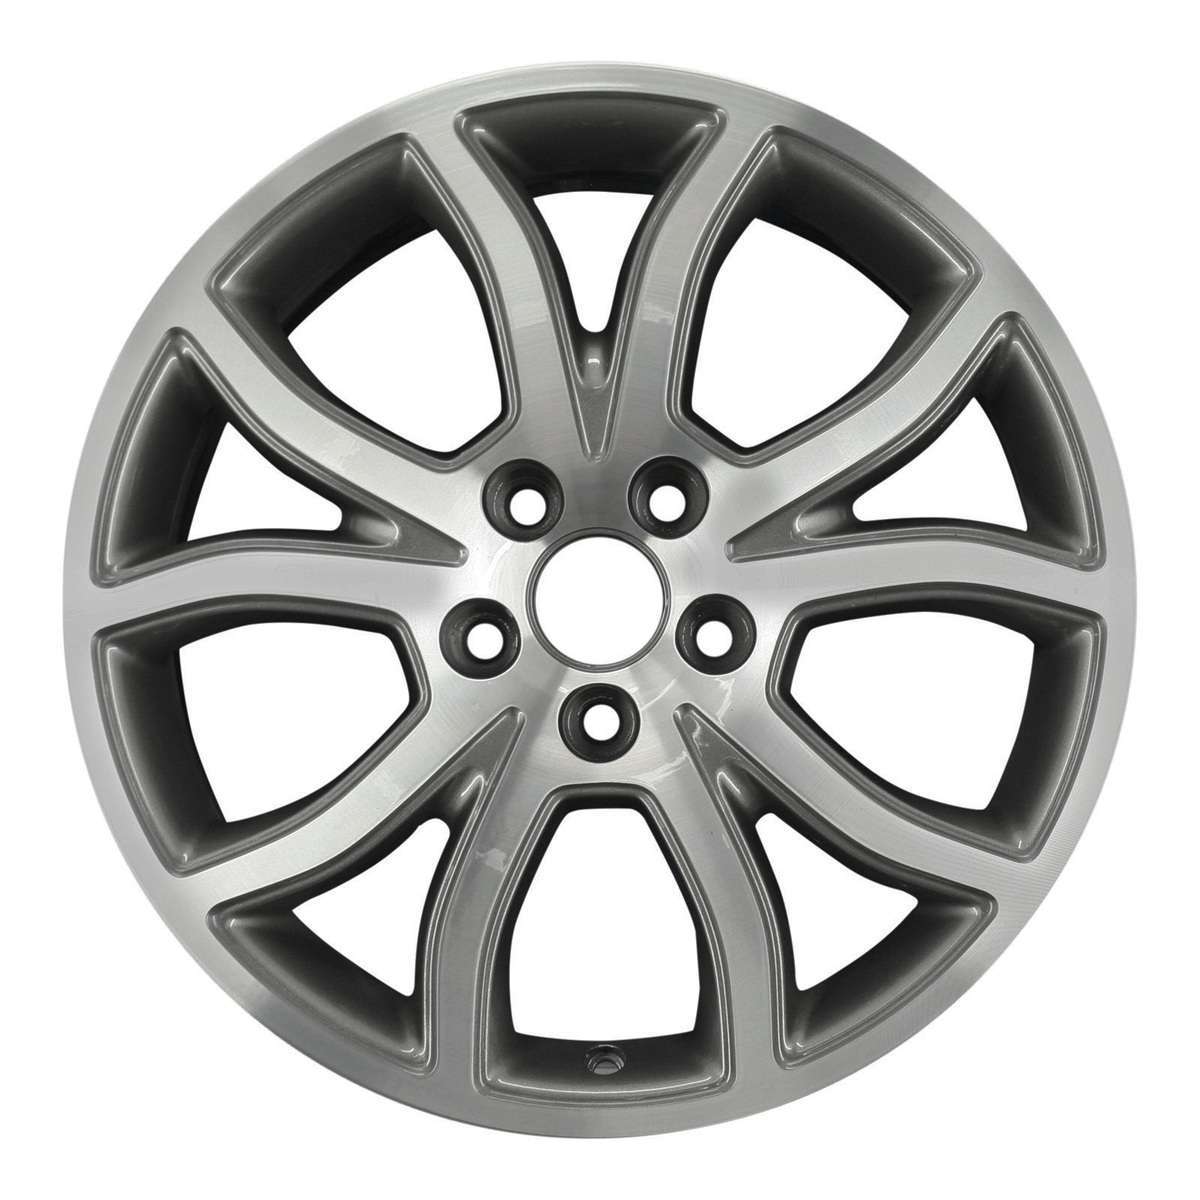 2011 Ford Fusion 18" OEM Wheel Rim W3801MC